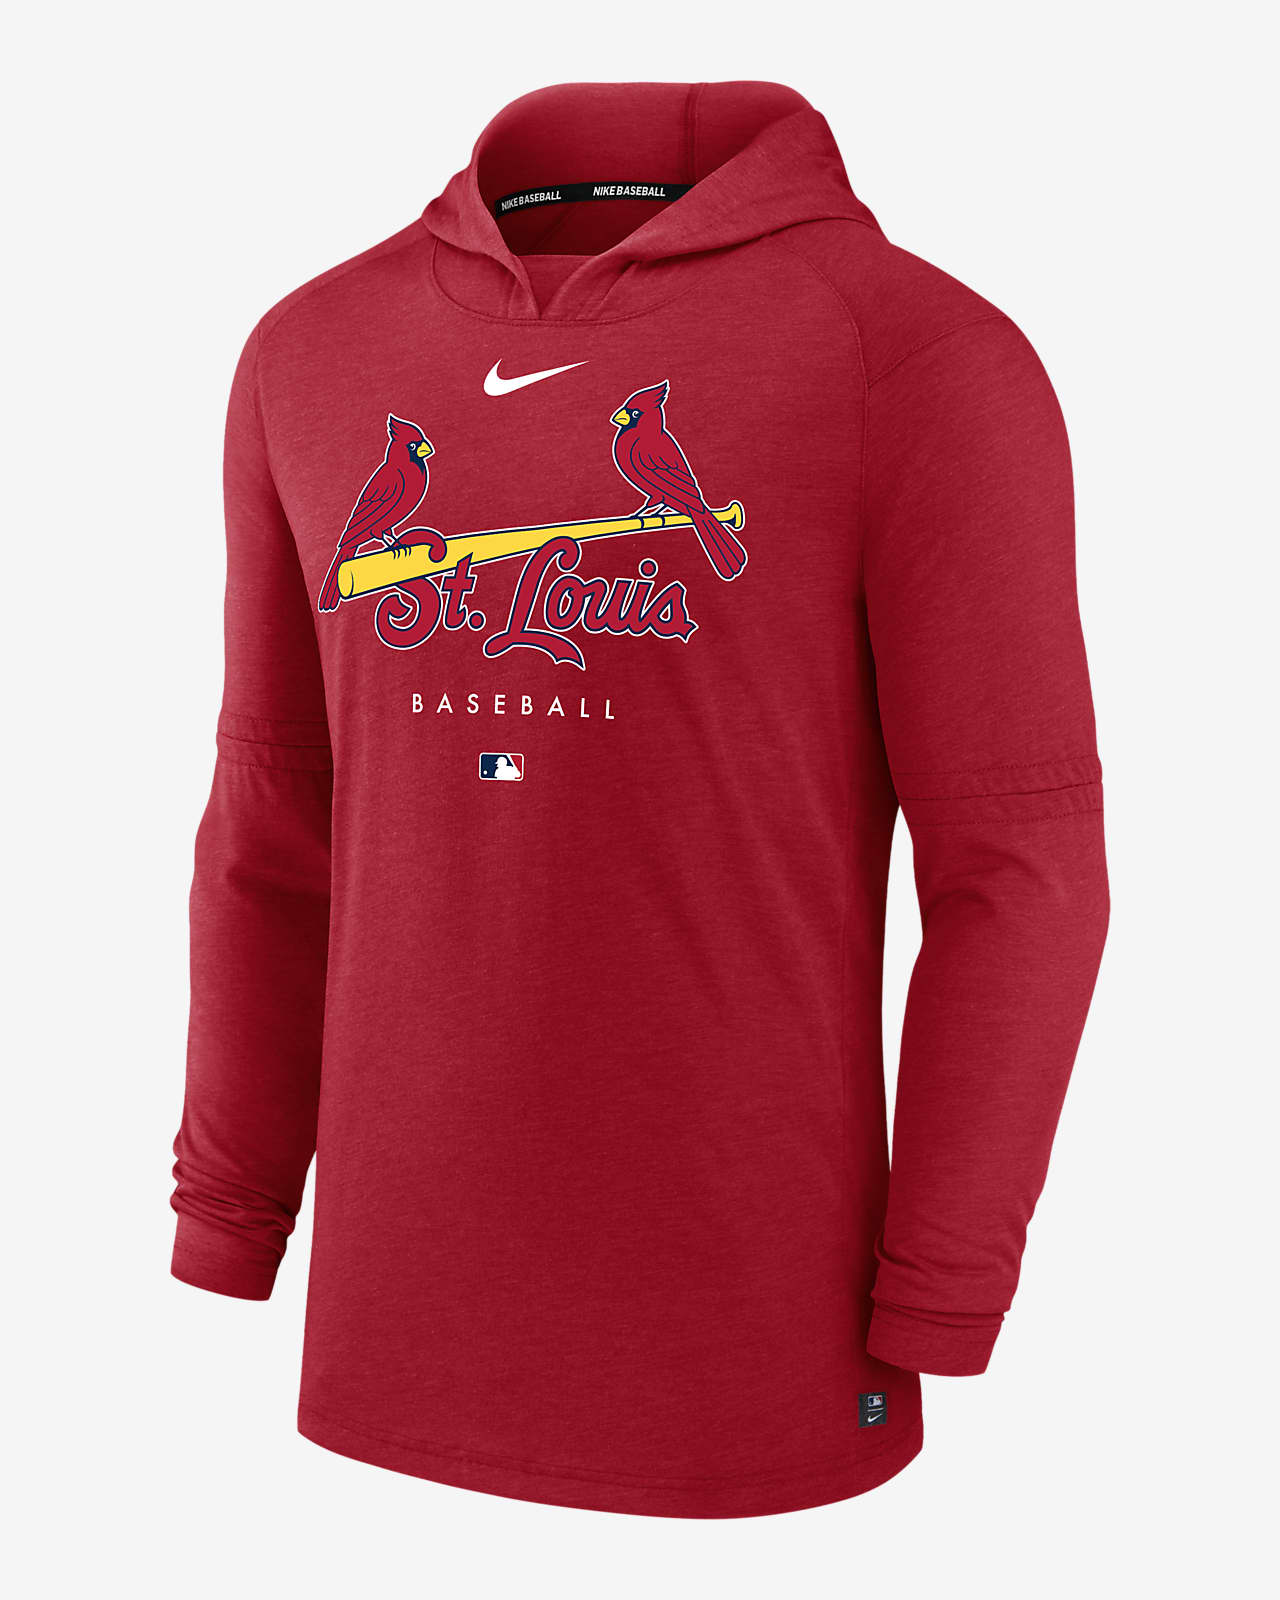 Baseball Hoodies  Pullovers Nikecom